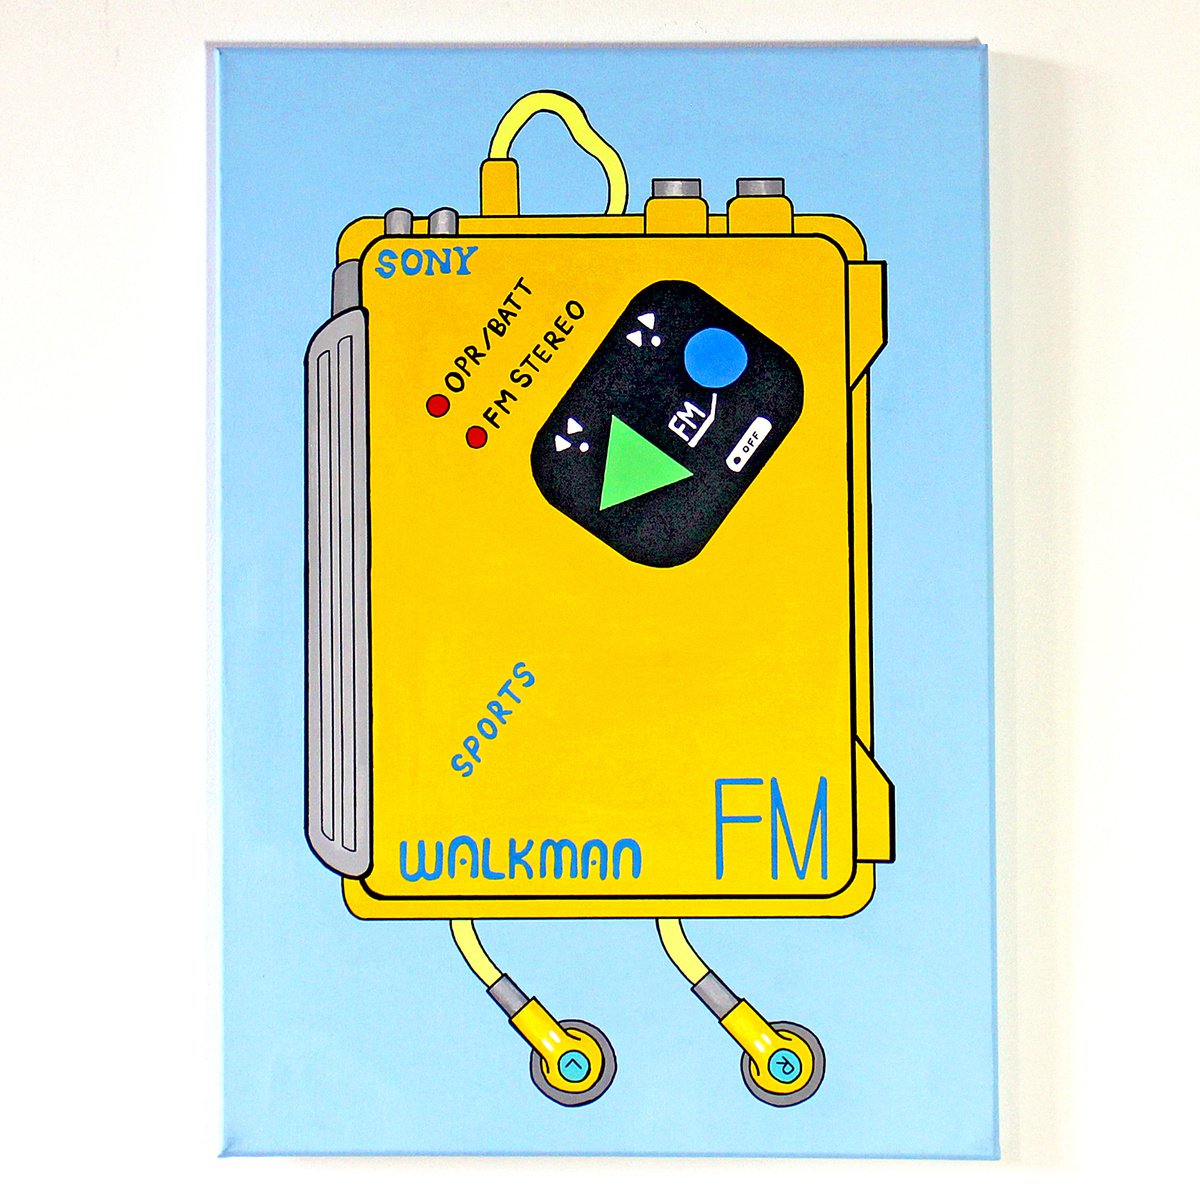 Sony Yellow Sports Walkman Retro Pop Art Painting On A2 Canvas by Ian Viggars